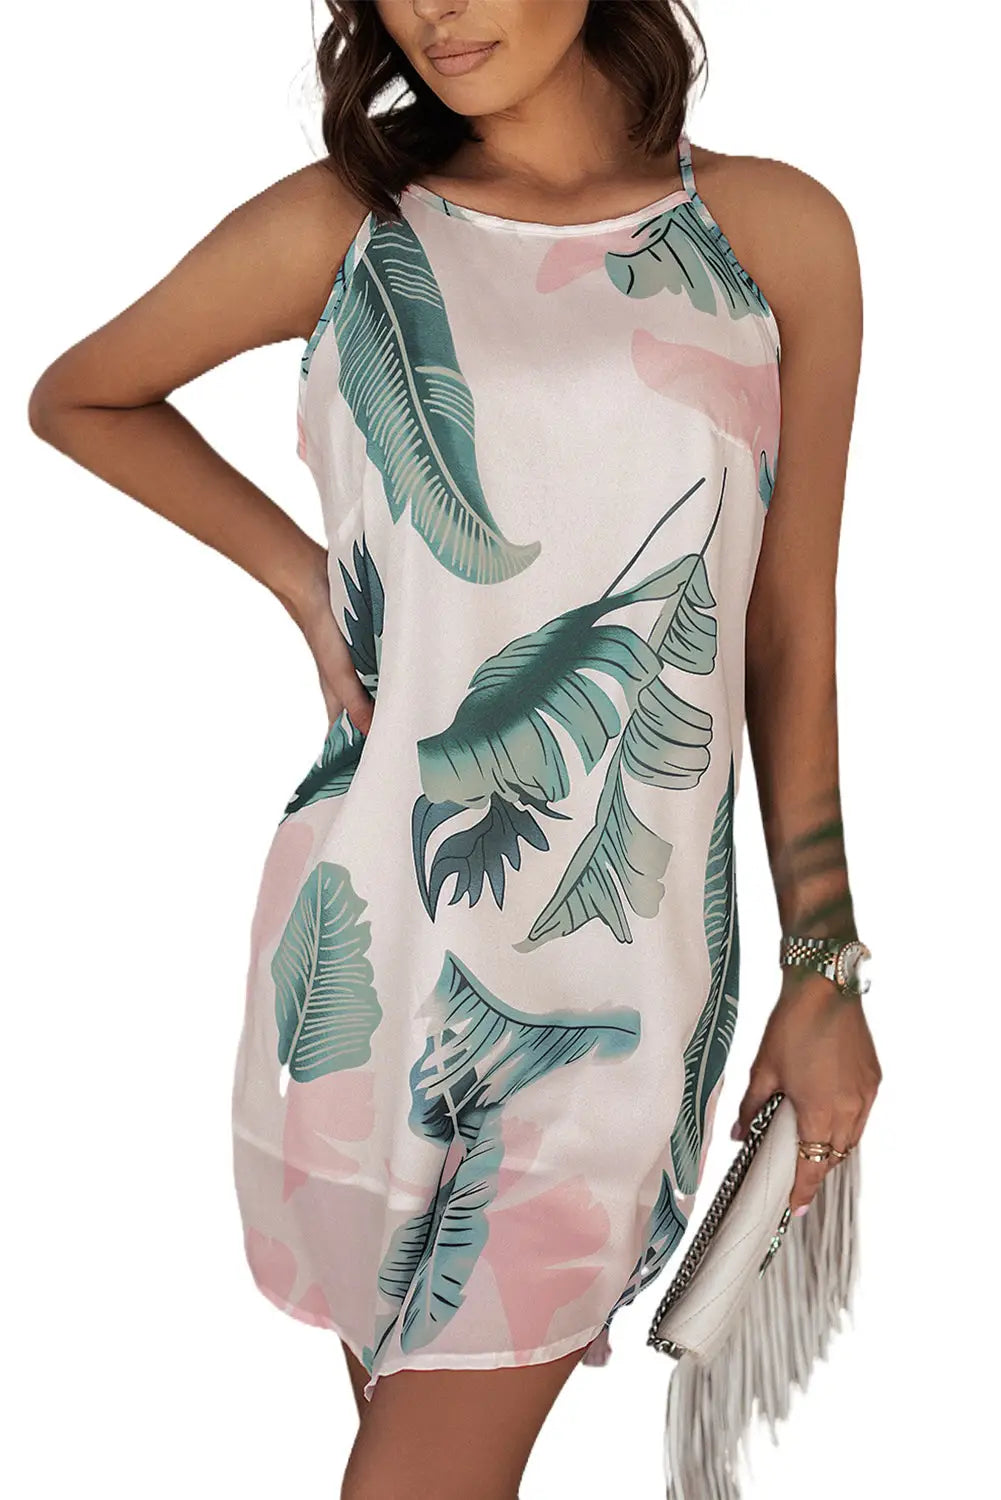 Palm tree leaf print ivory sleeveless dress - floral dresses